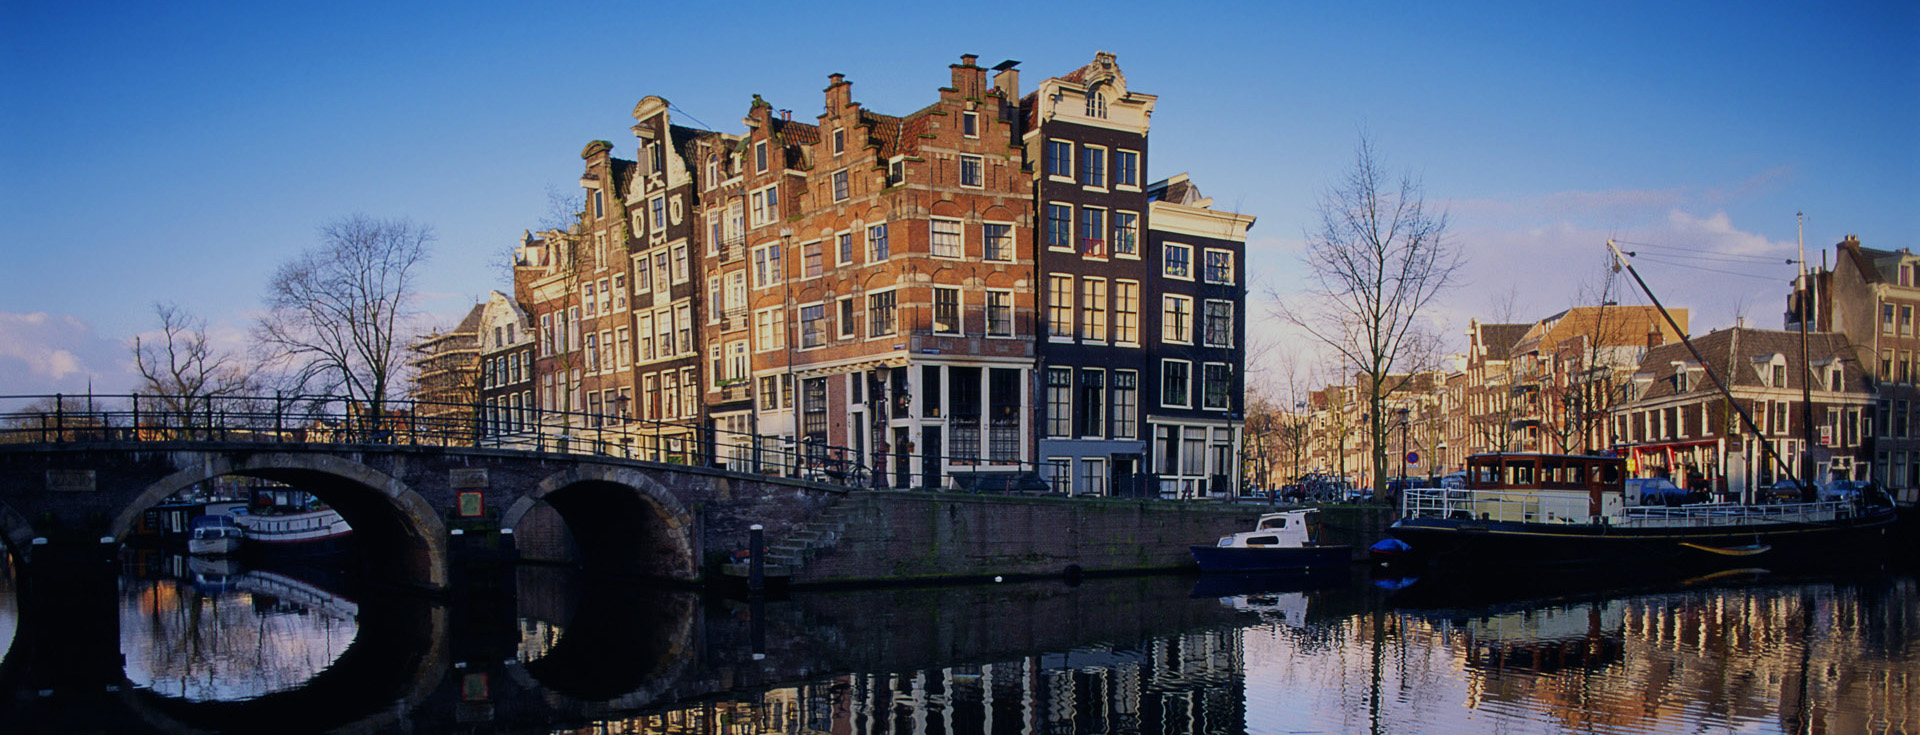 Grachten van Amsterdam (Scene in Amsterdam)